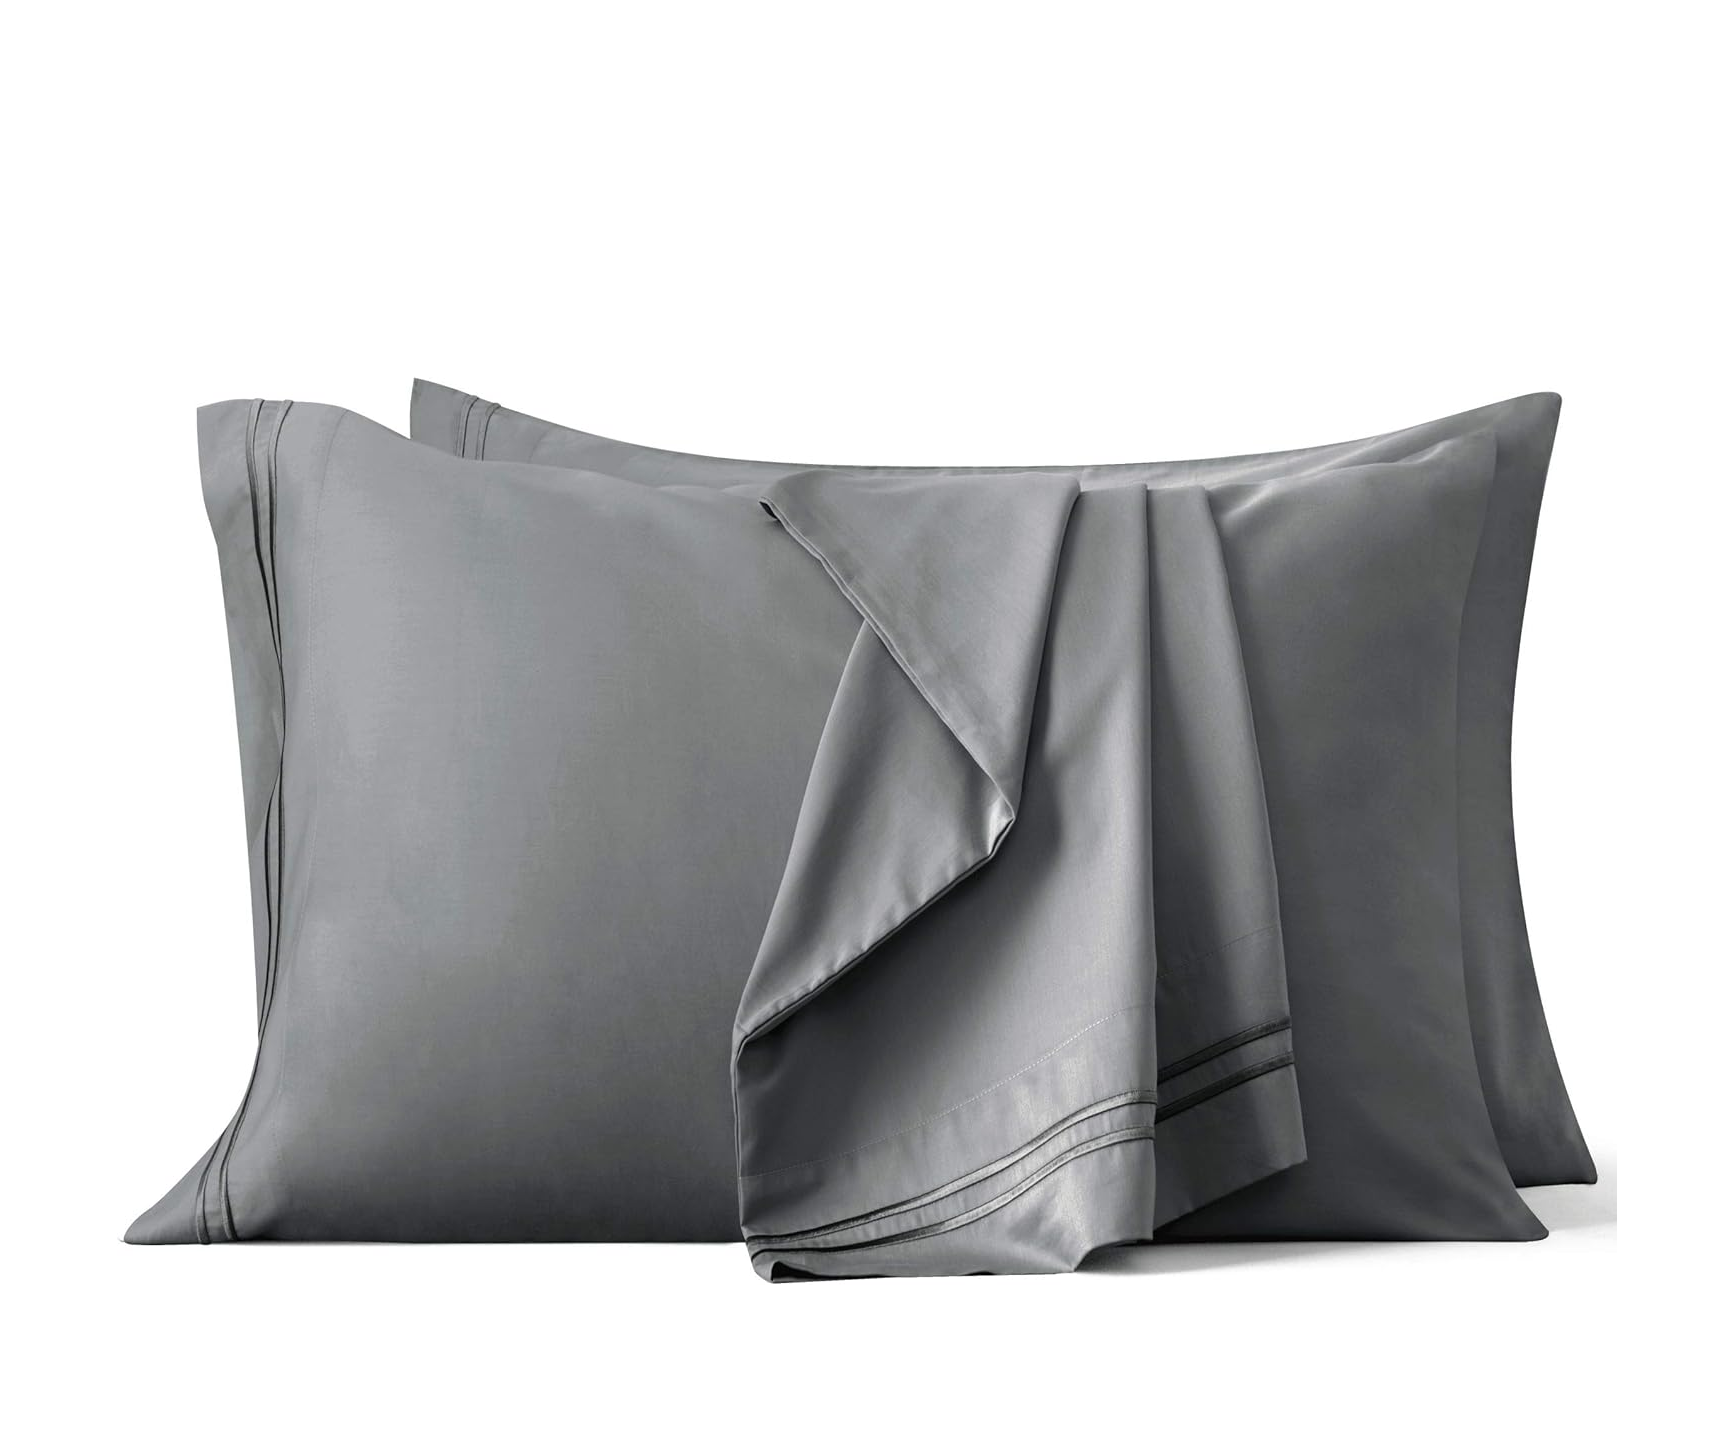 subtex Pillow Covers Pillowcases